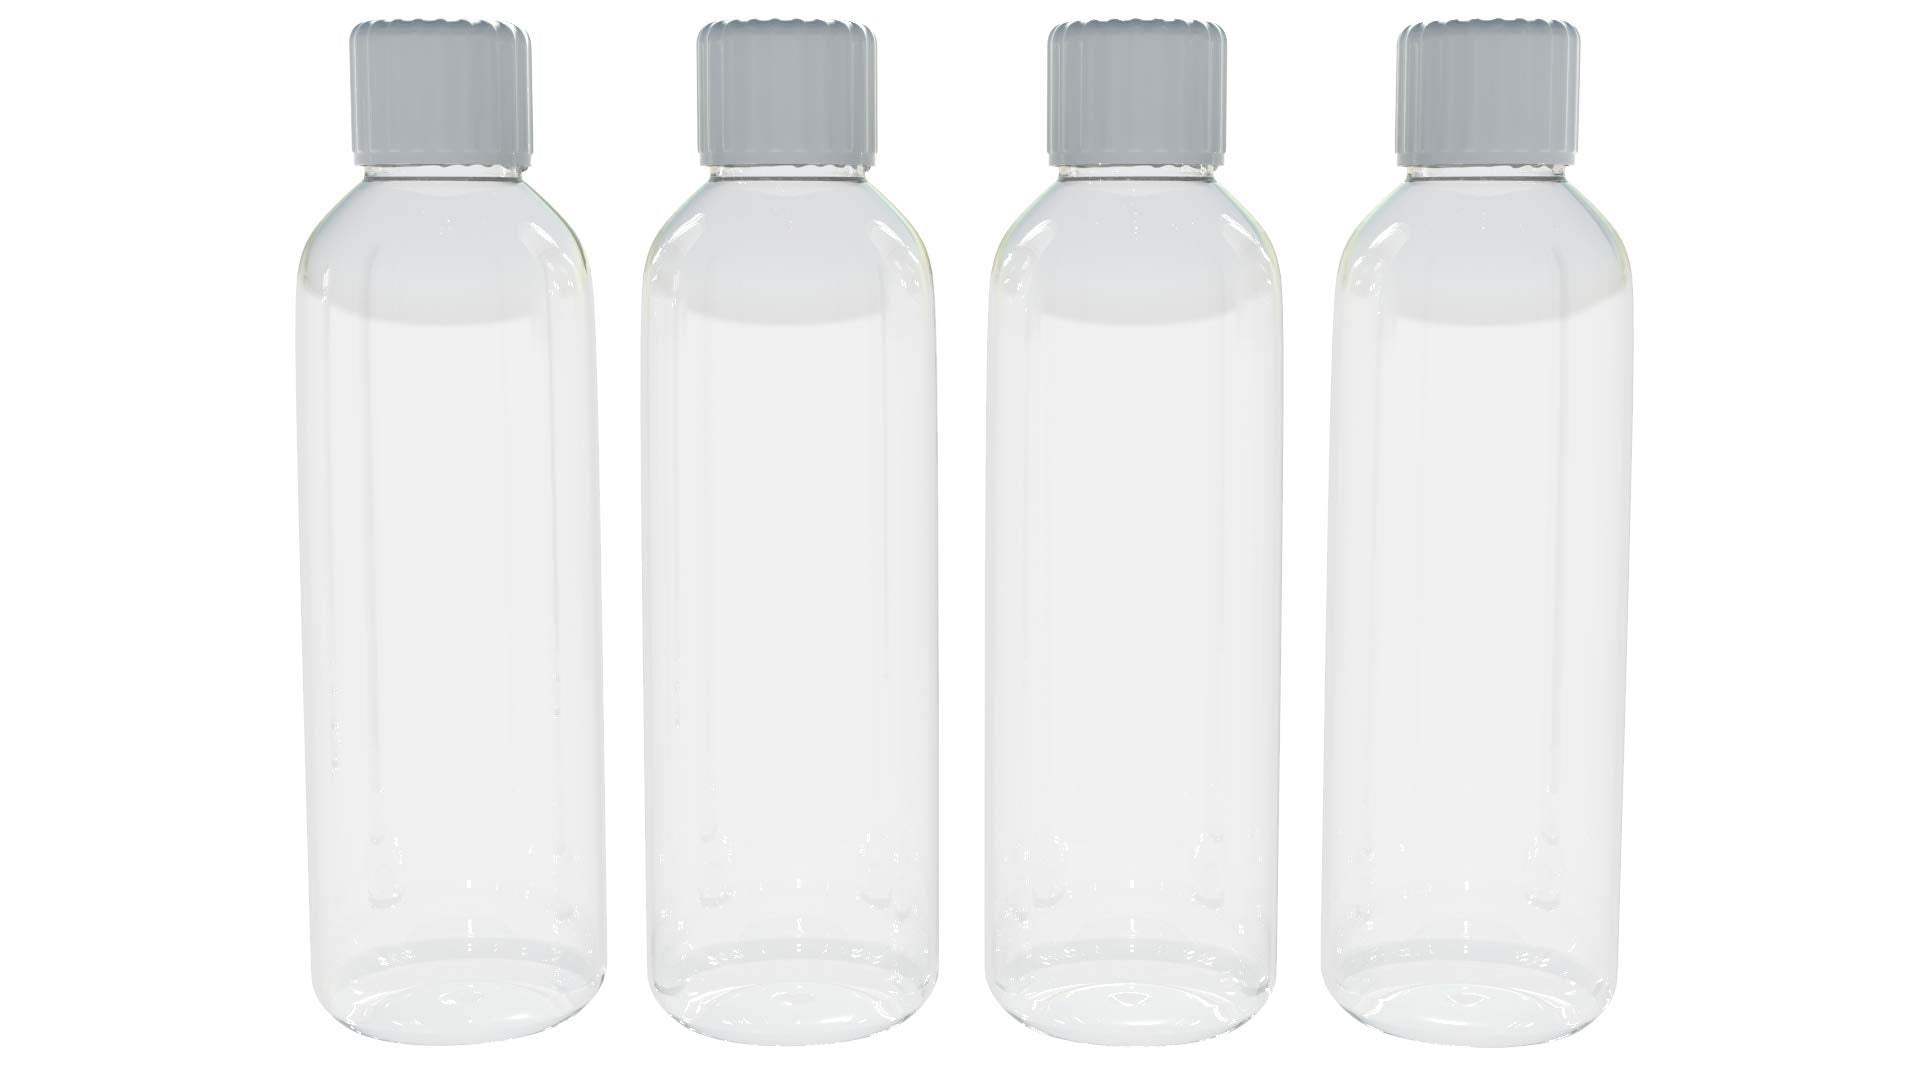 AME Bespoke Multi Pack of 4 Plastic Bottles with Screw Lids 100ml Bottles Ideal for Travel